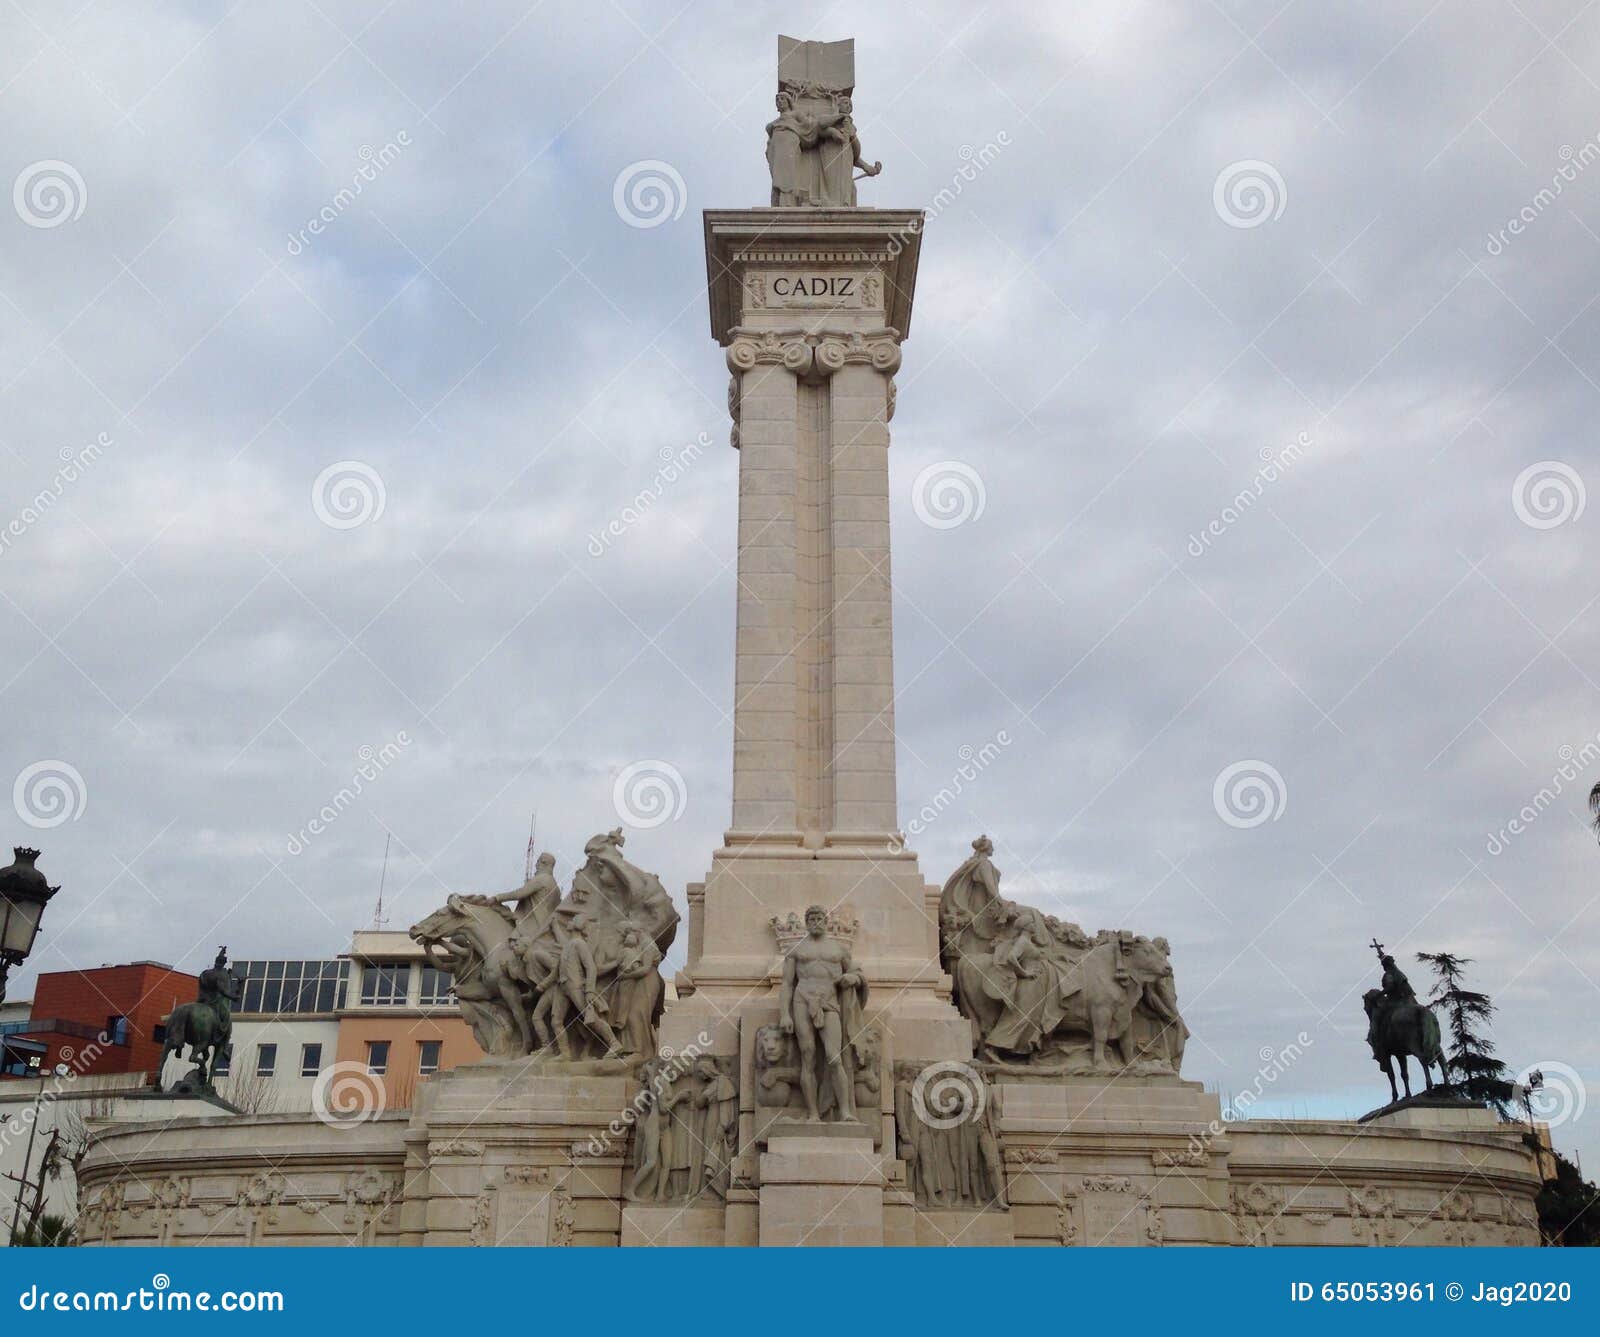 Cadiz Monument stock image. Image of bicentennial, famous - 65053961